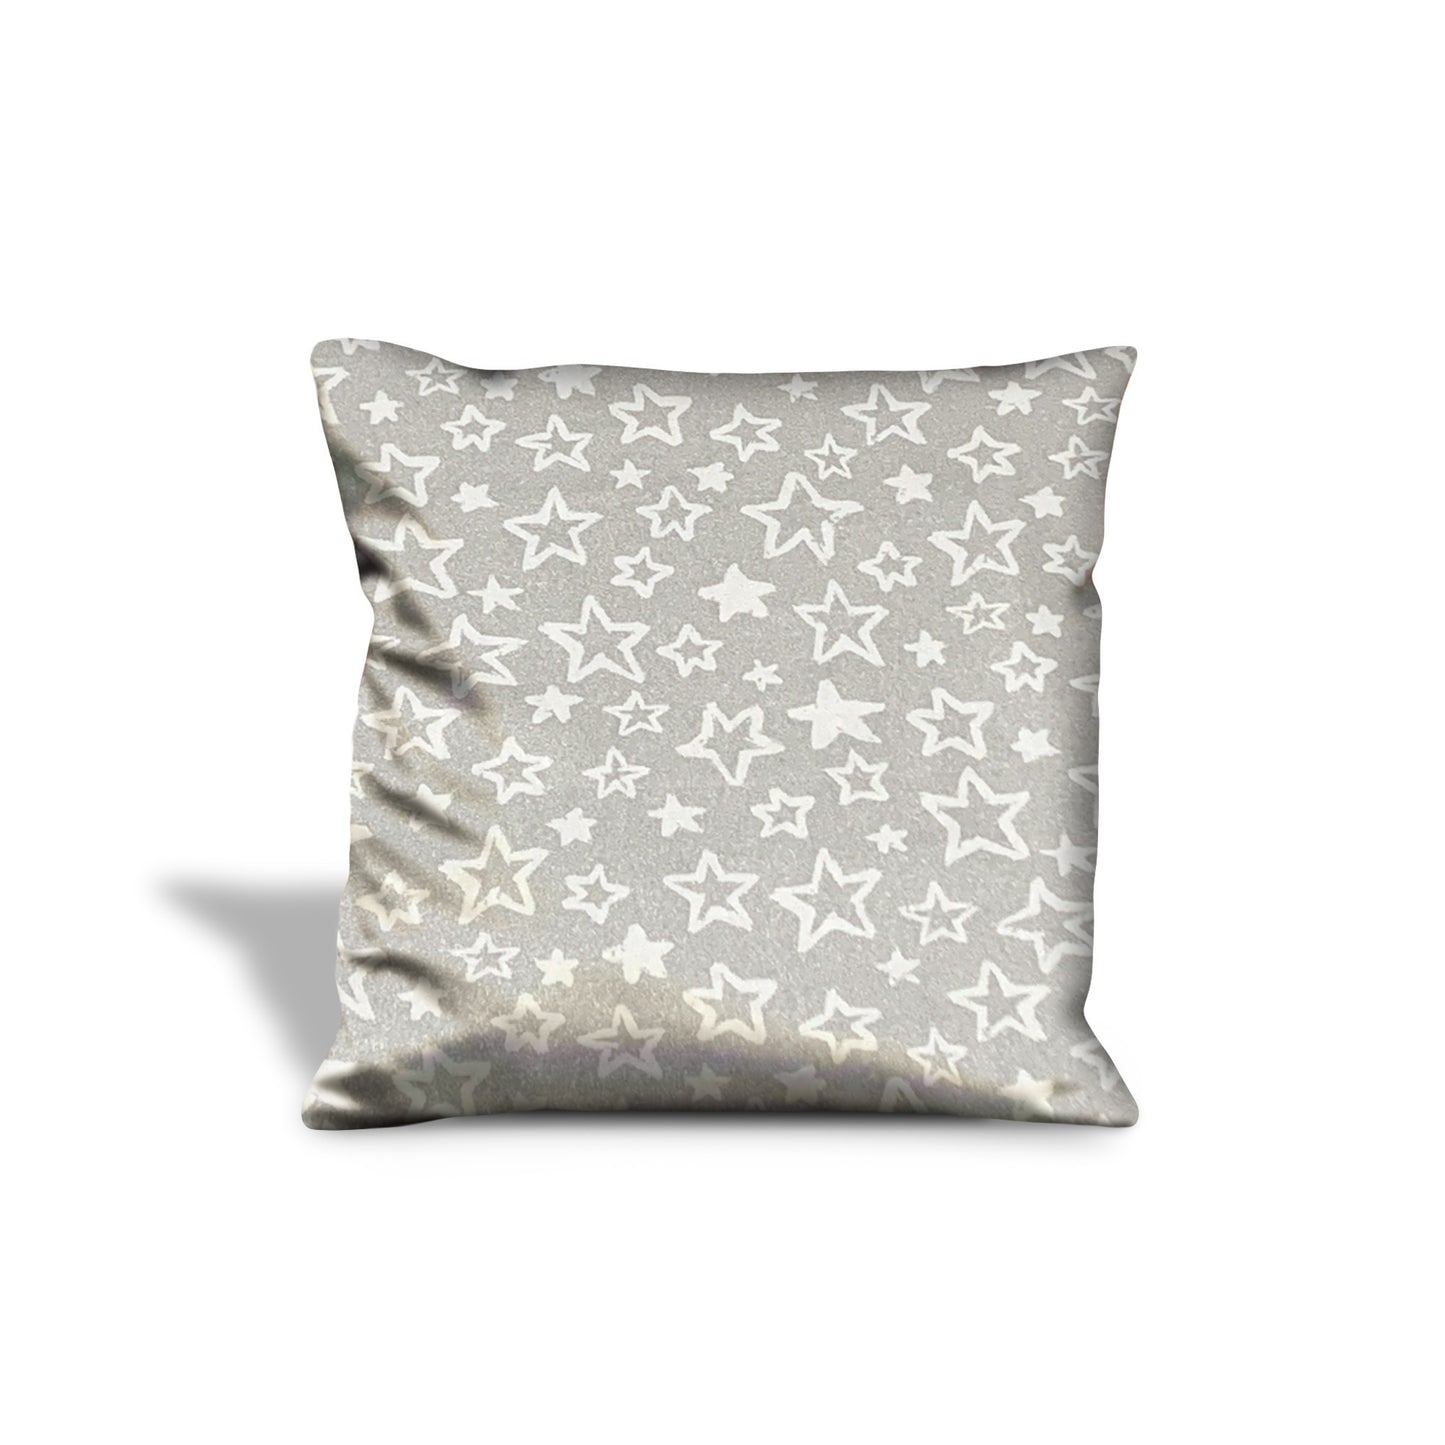 17" X 17" Silver Zippered 100% Cotton Throw Pillow Cover